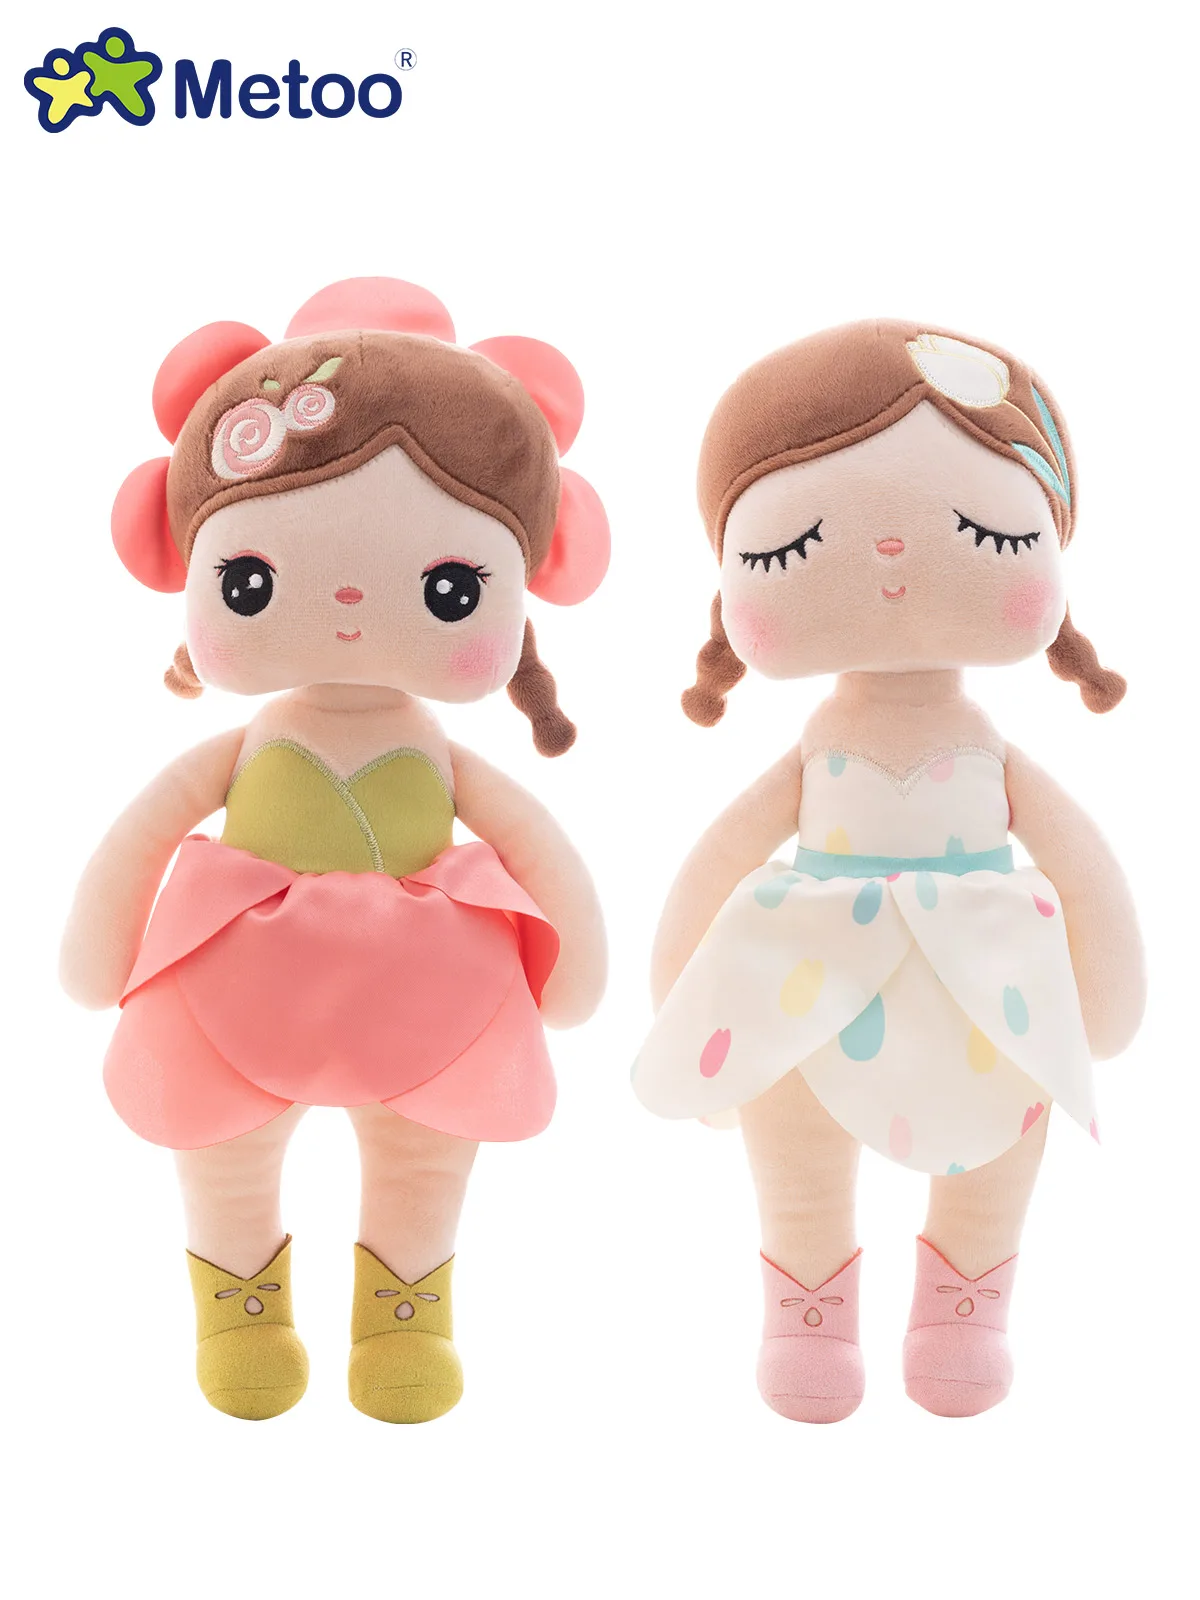 

2022 New Original Metoo Plush Toy Flower Fairy Design Angela Dolls With Beautiful Flower Dress For Girls As Birthday Gift